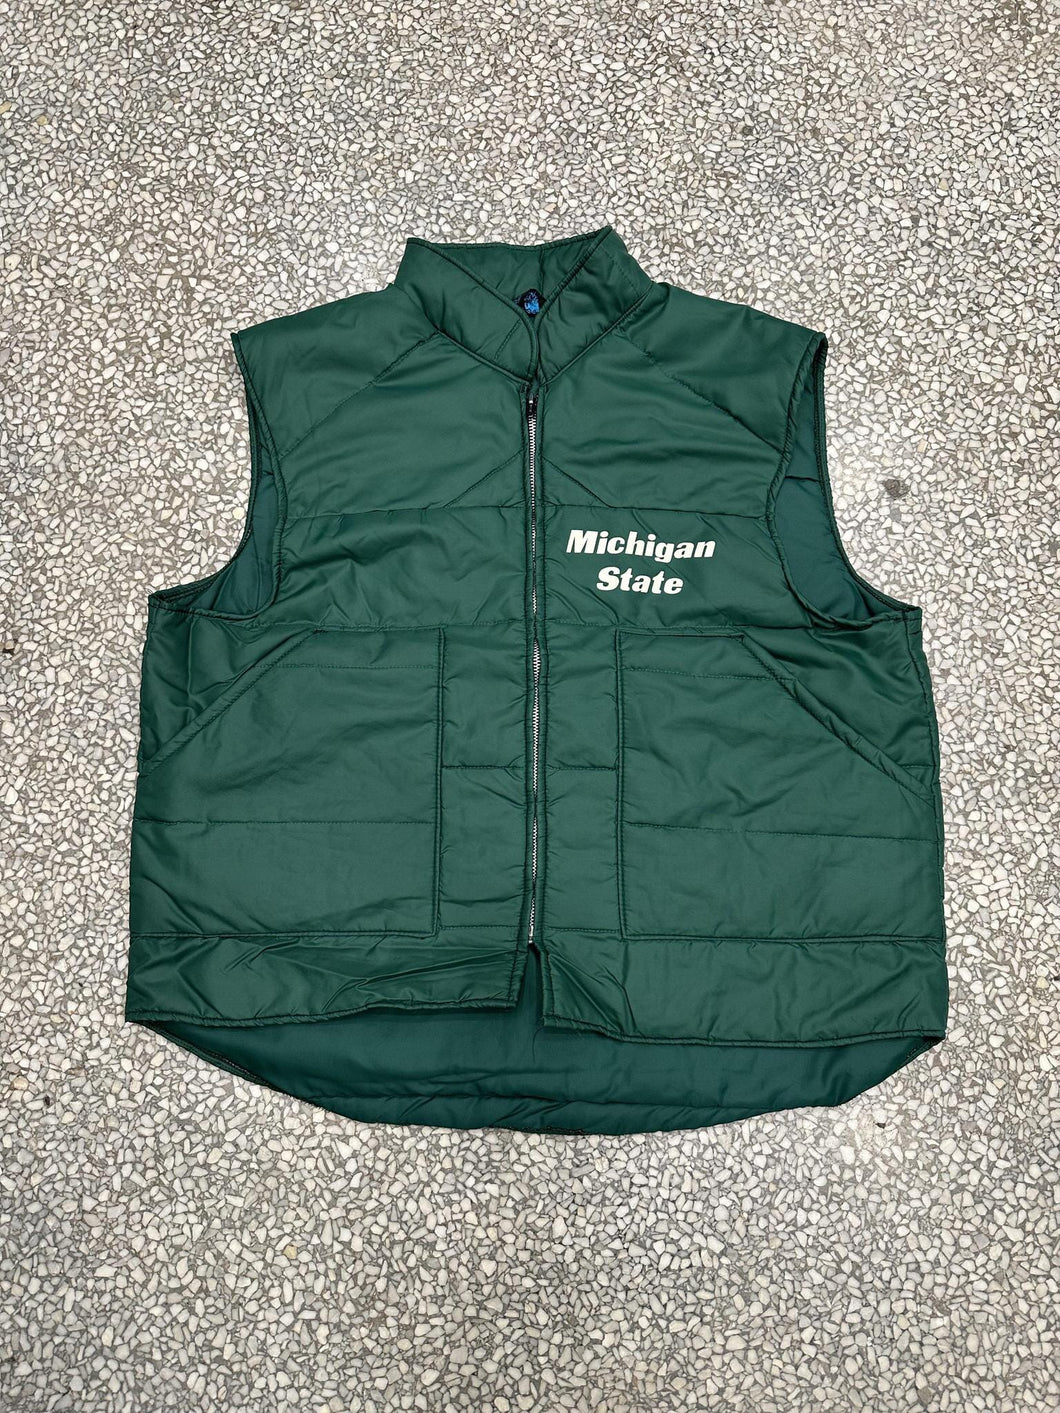 Michigan State Vintage 90s Champion Zip Up Vest ABC Vintage 